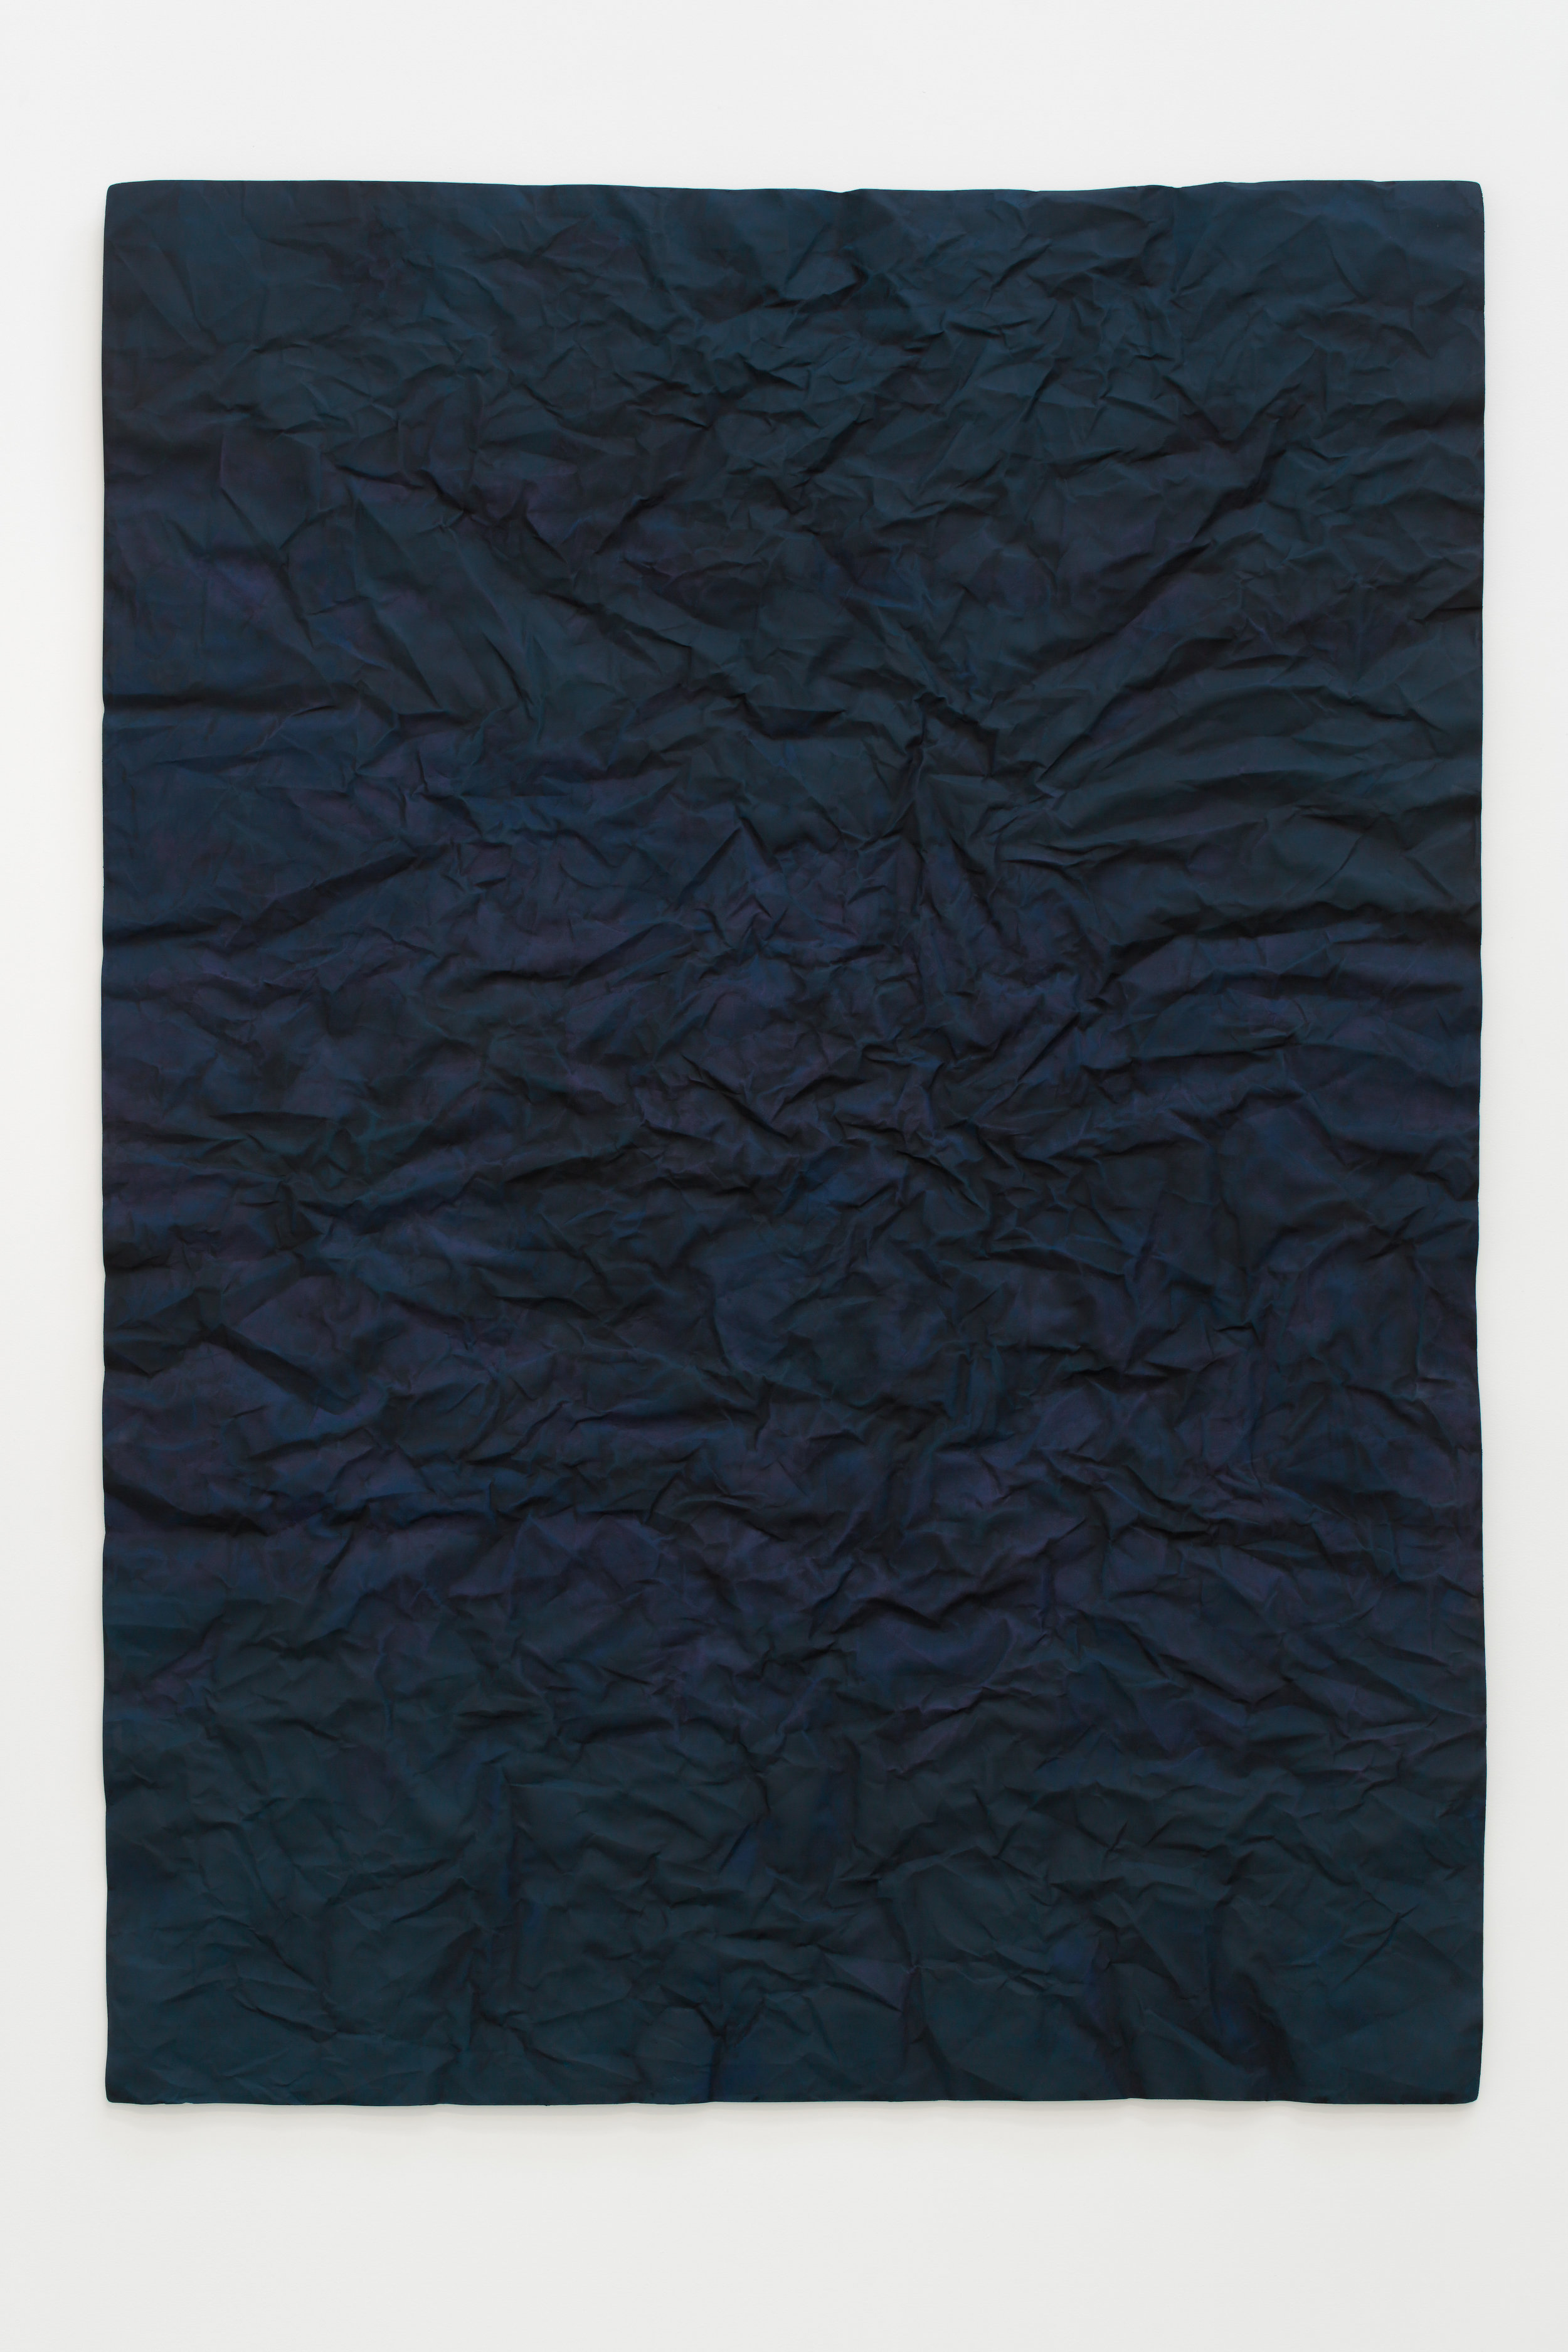  Jiří Matějů,  Black Surface (Third Meeting Place) , 2015, mixed media and pigments on canvas, 220 x 160 cm 